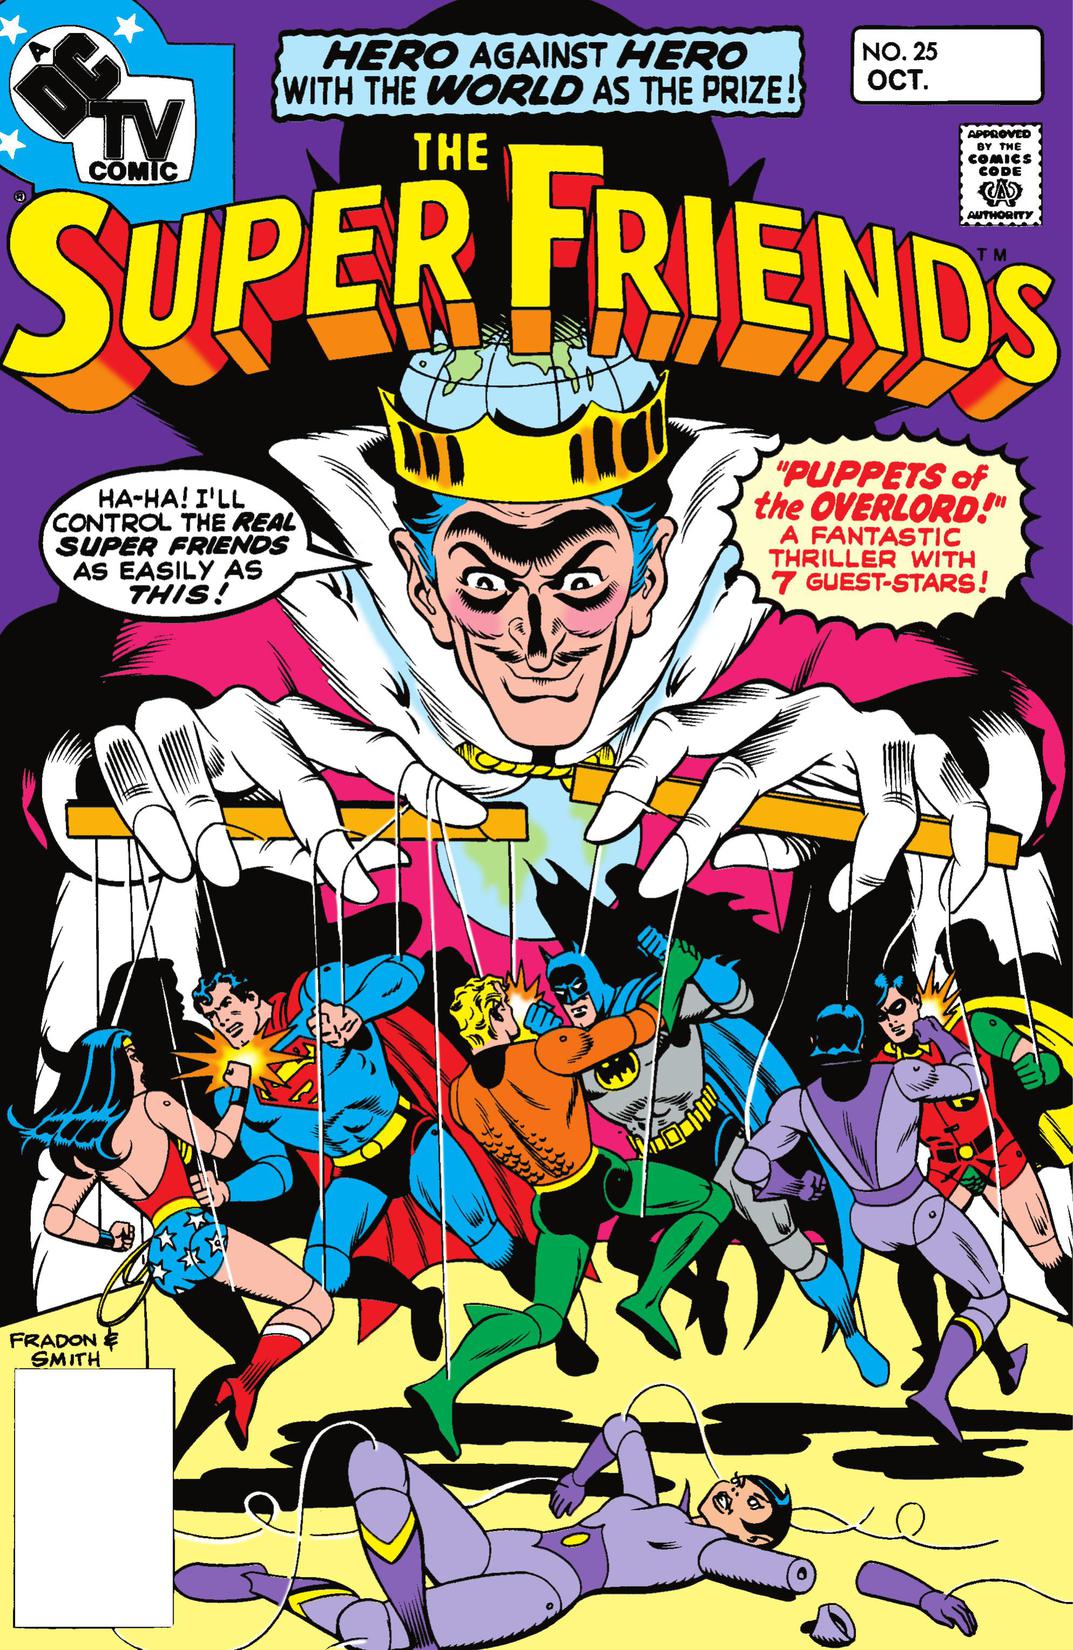 Super Friends (1976-) #25 preview images